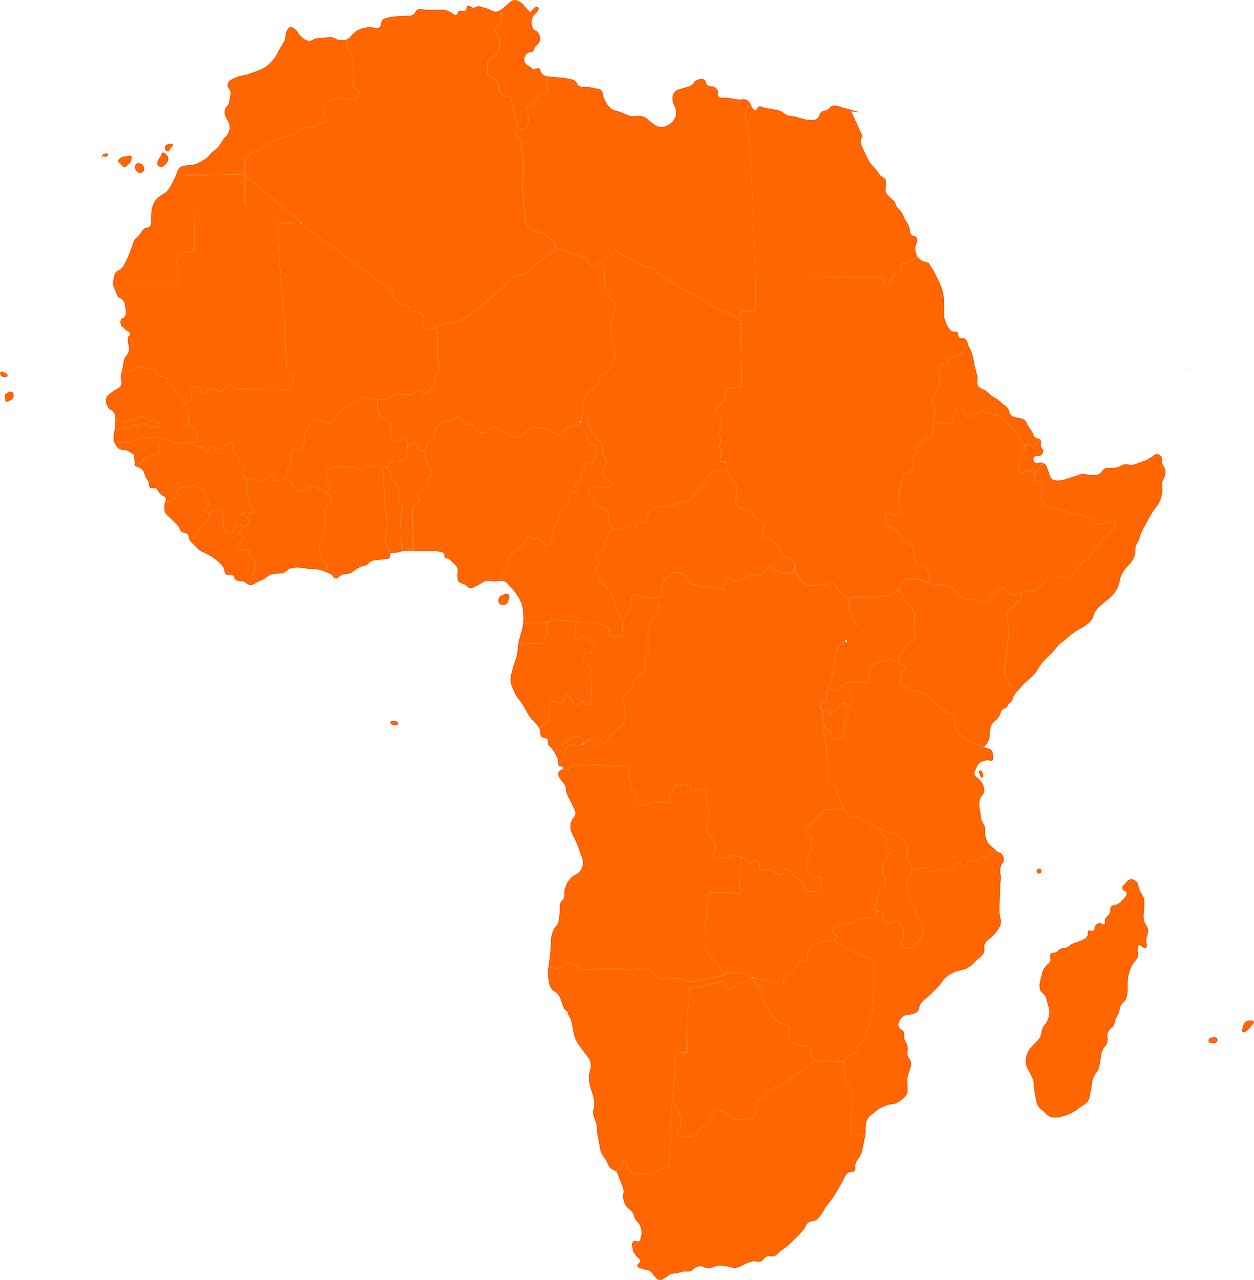 An Orange Map Of Africa